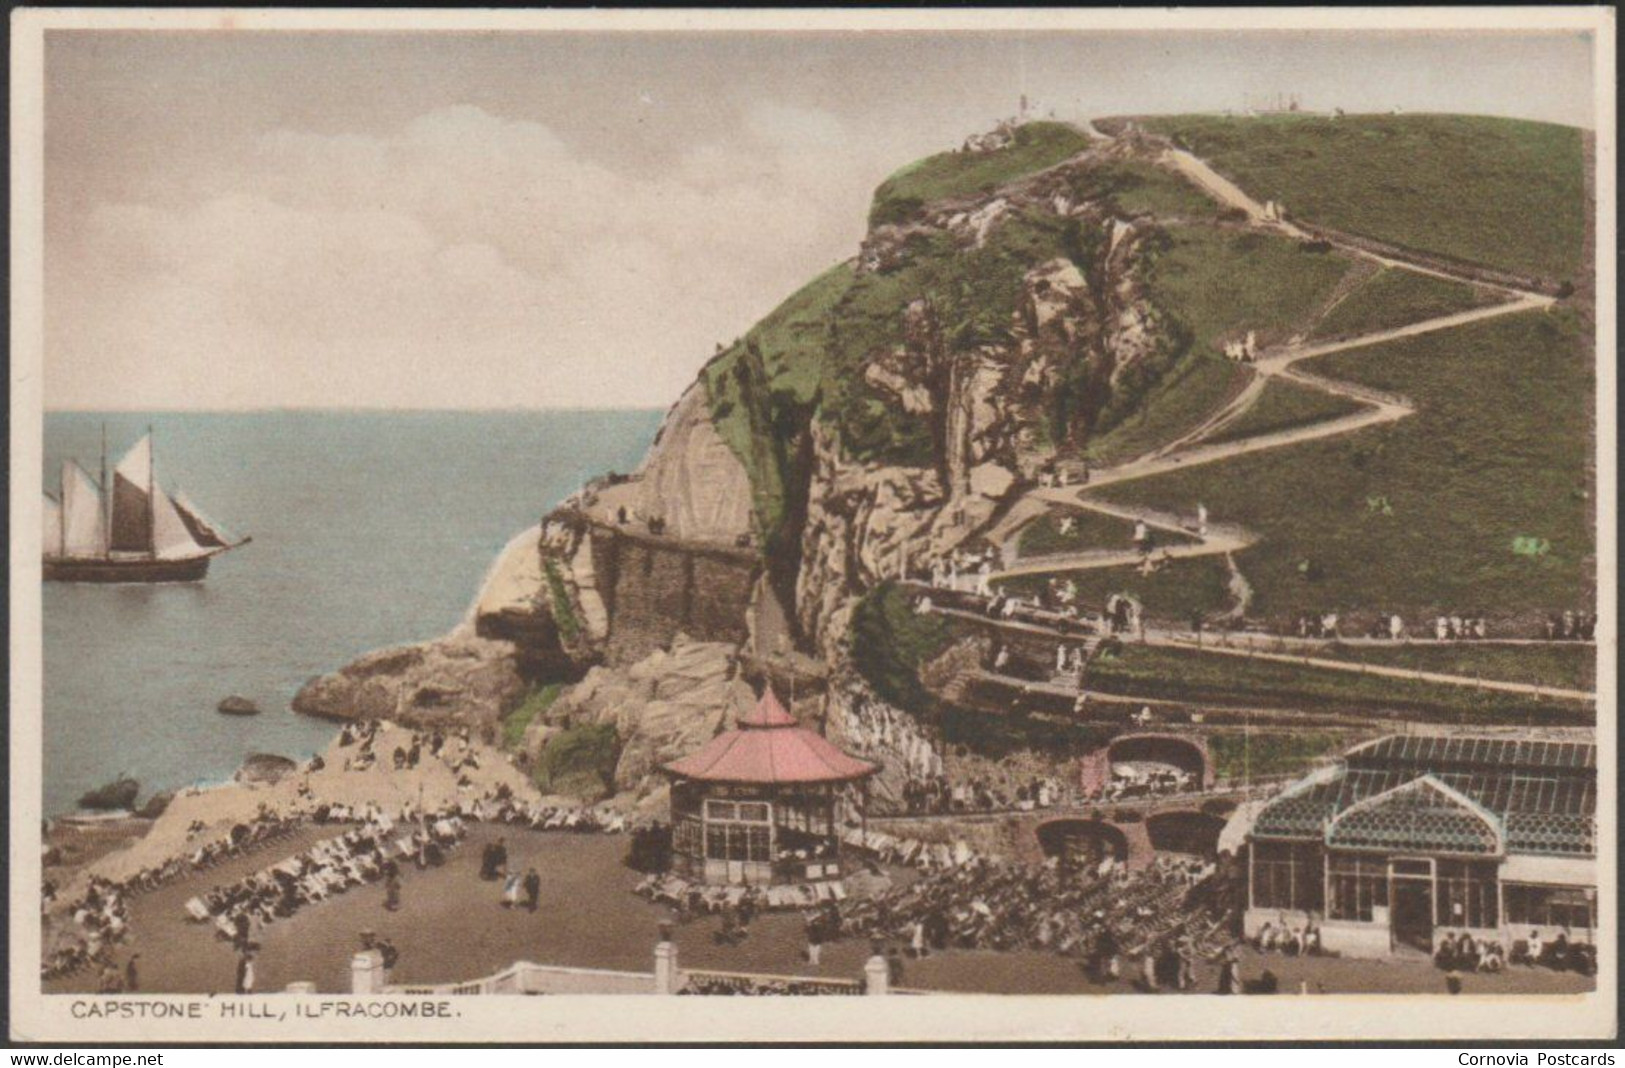 Capstone Hill, Ilfracombe, Devon, C.1940s - Emil Pinkau Postcard - Ilfracombe